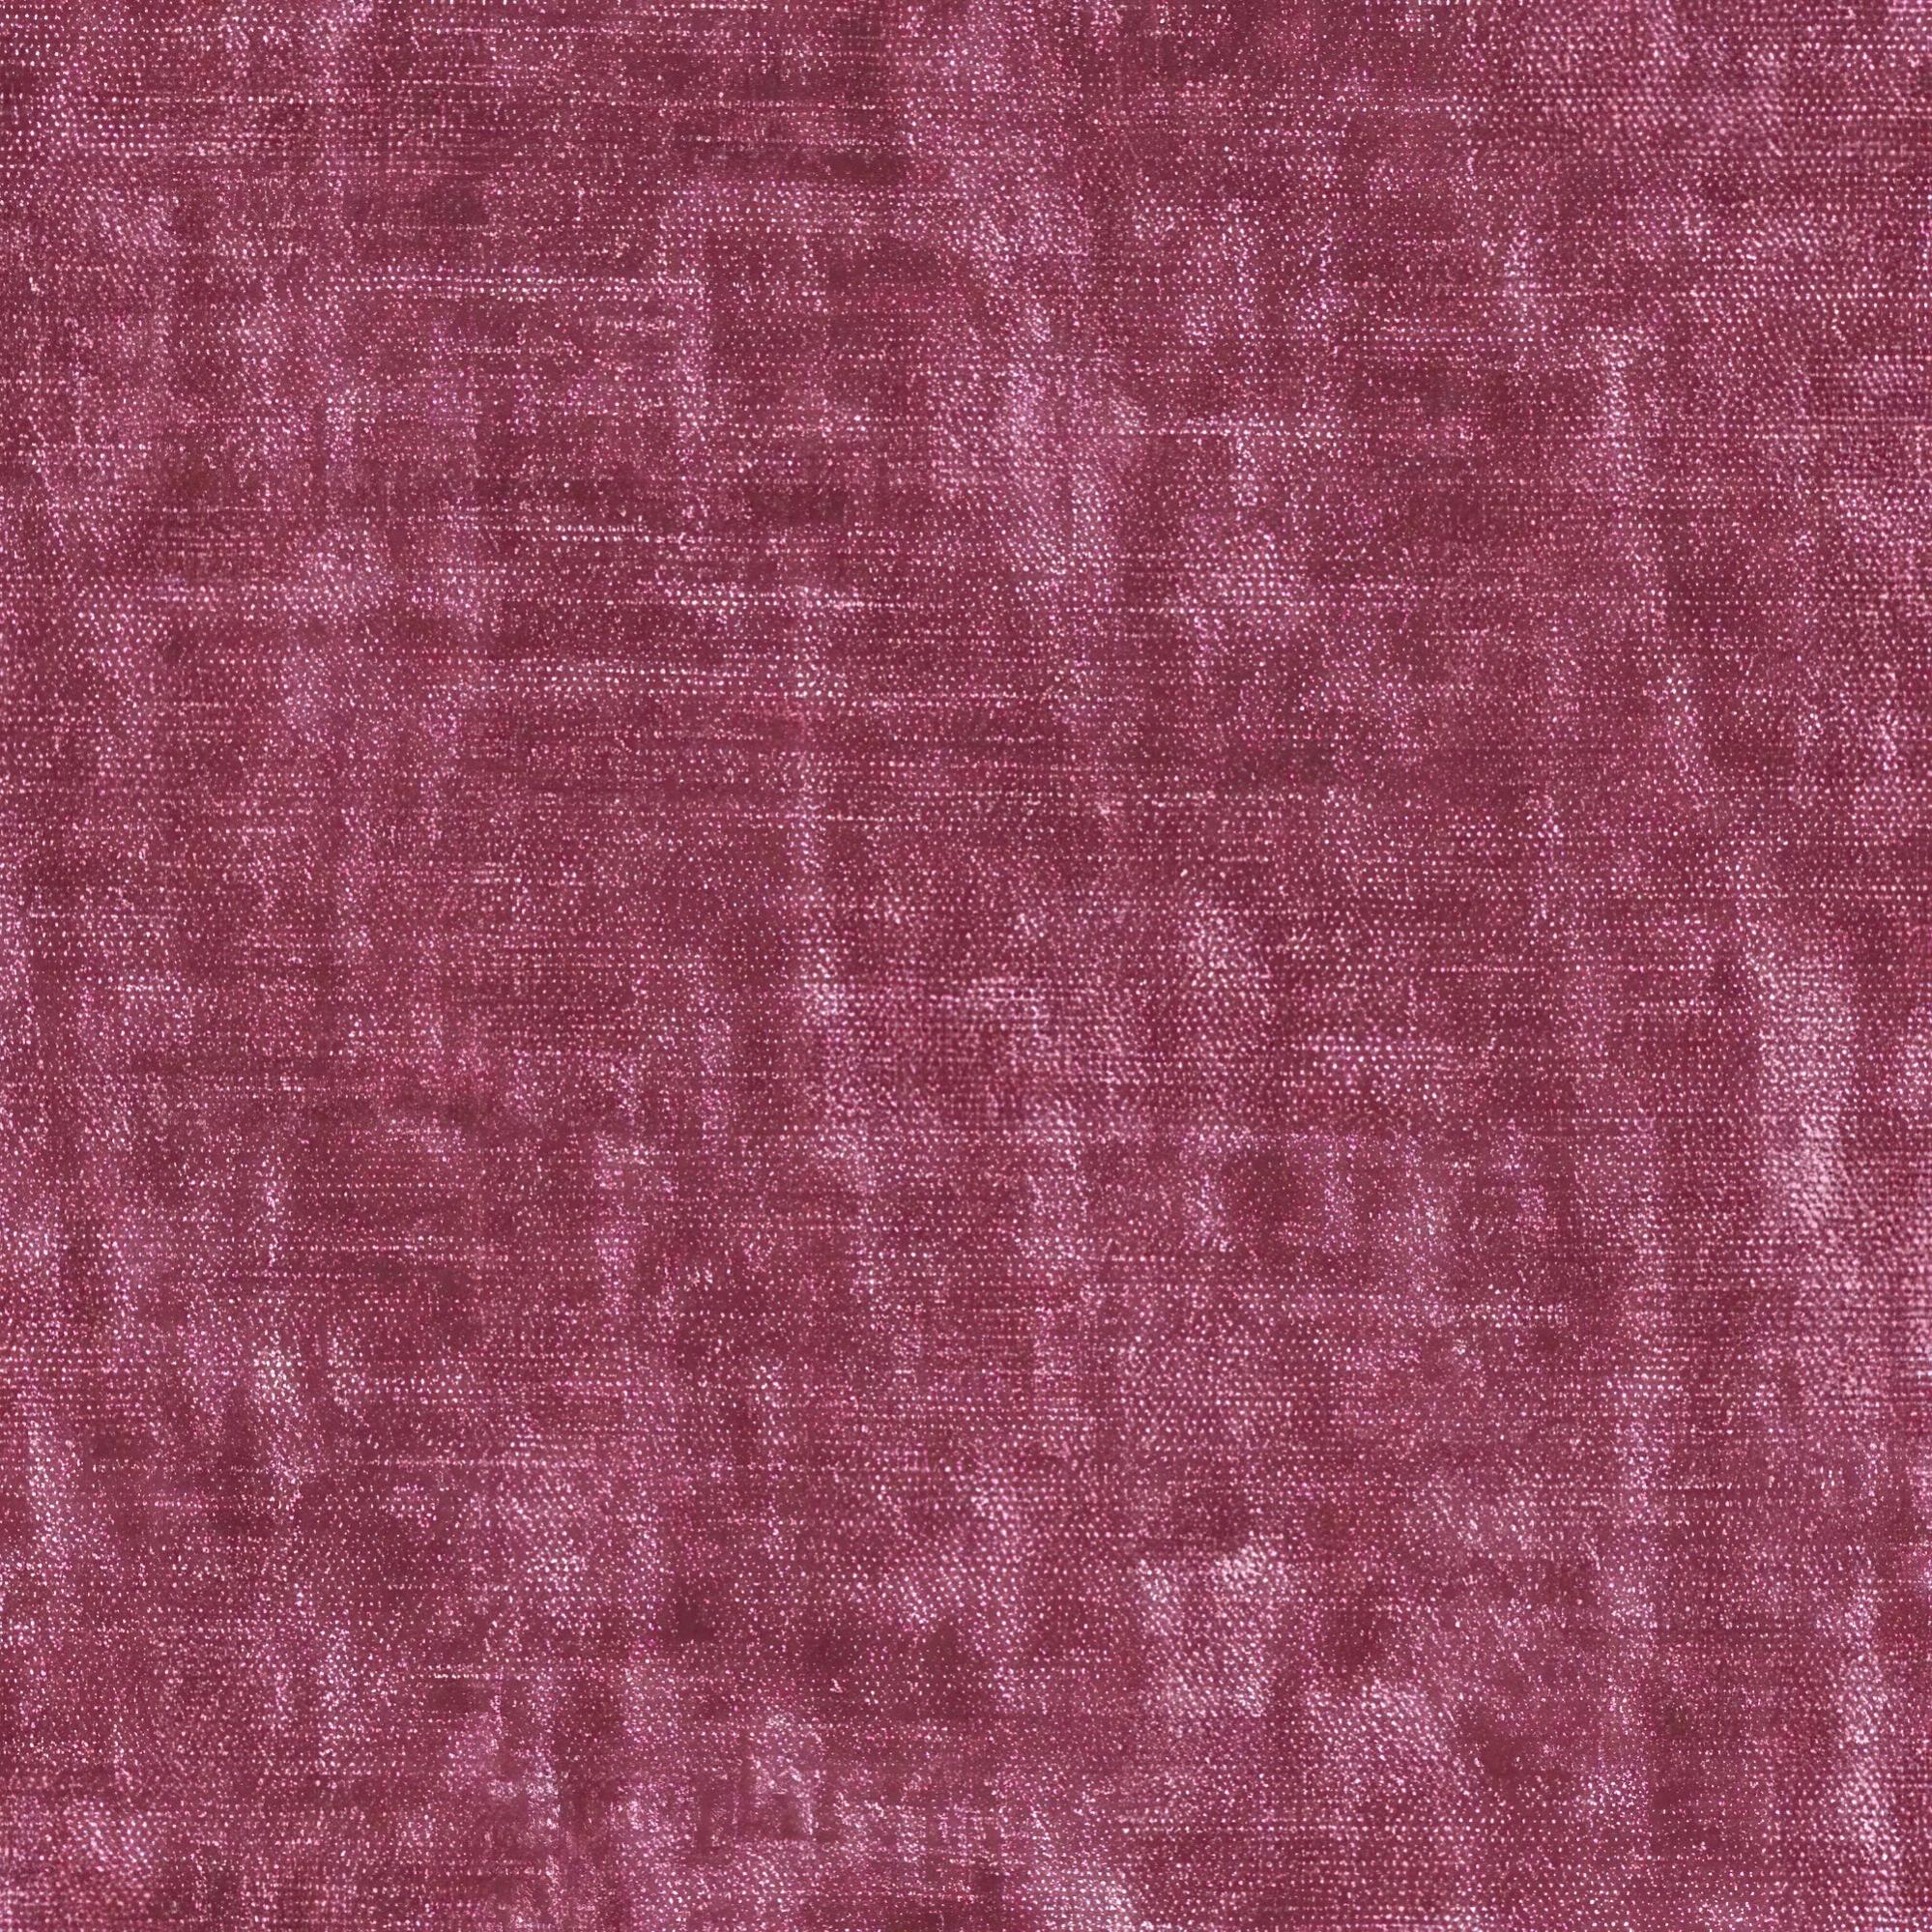 Tela al corte tapicería chenilla york rosa ancho 280 cm